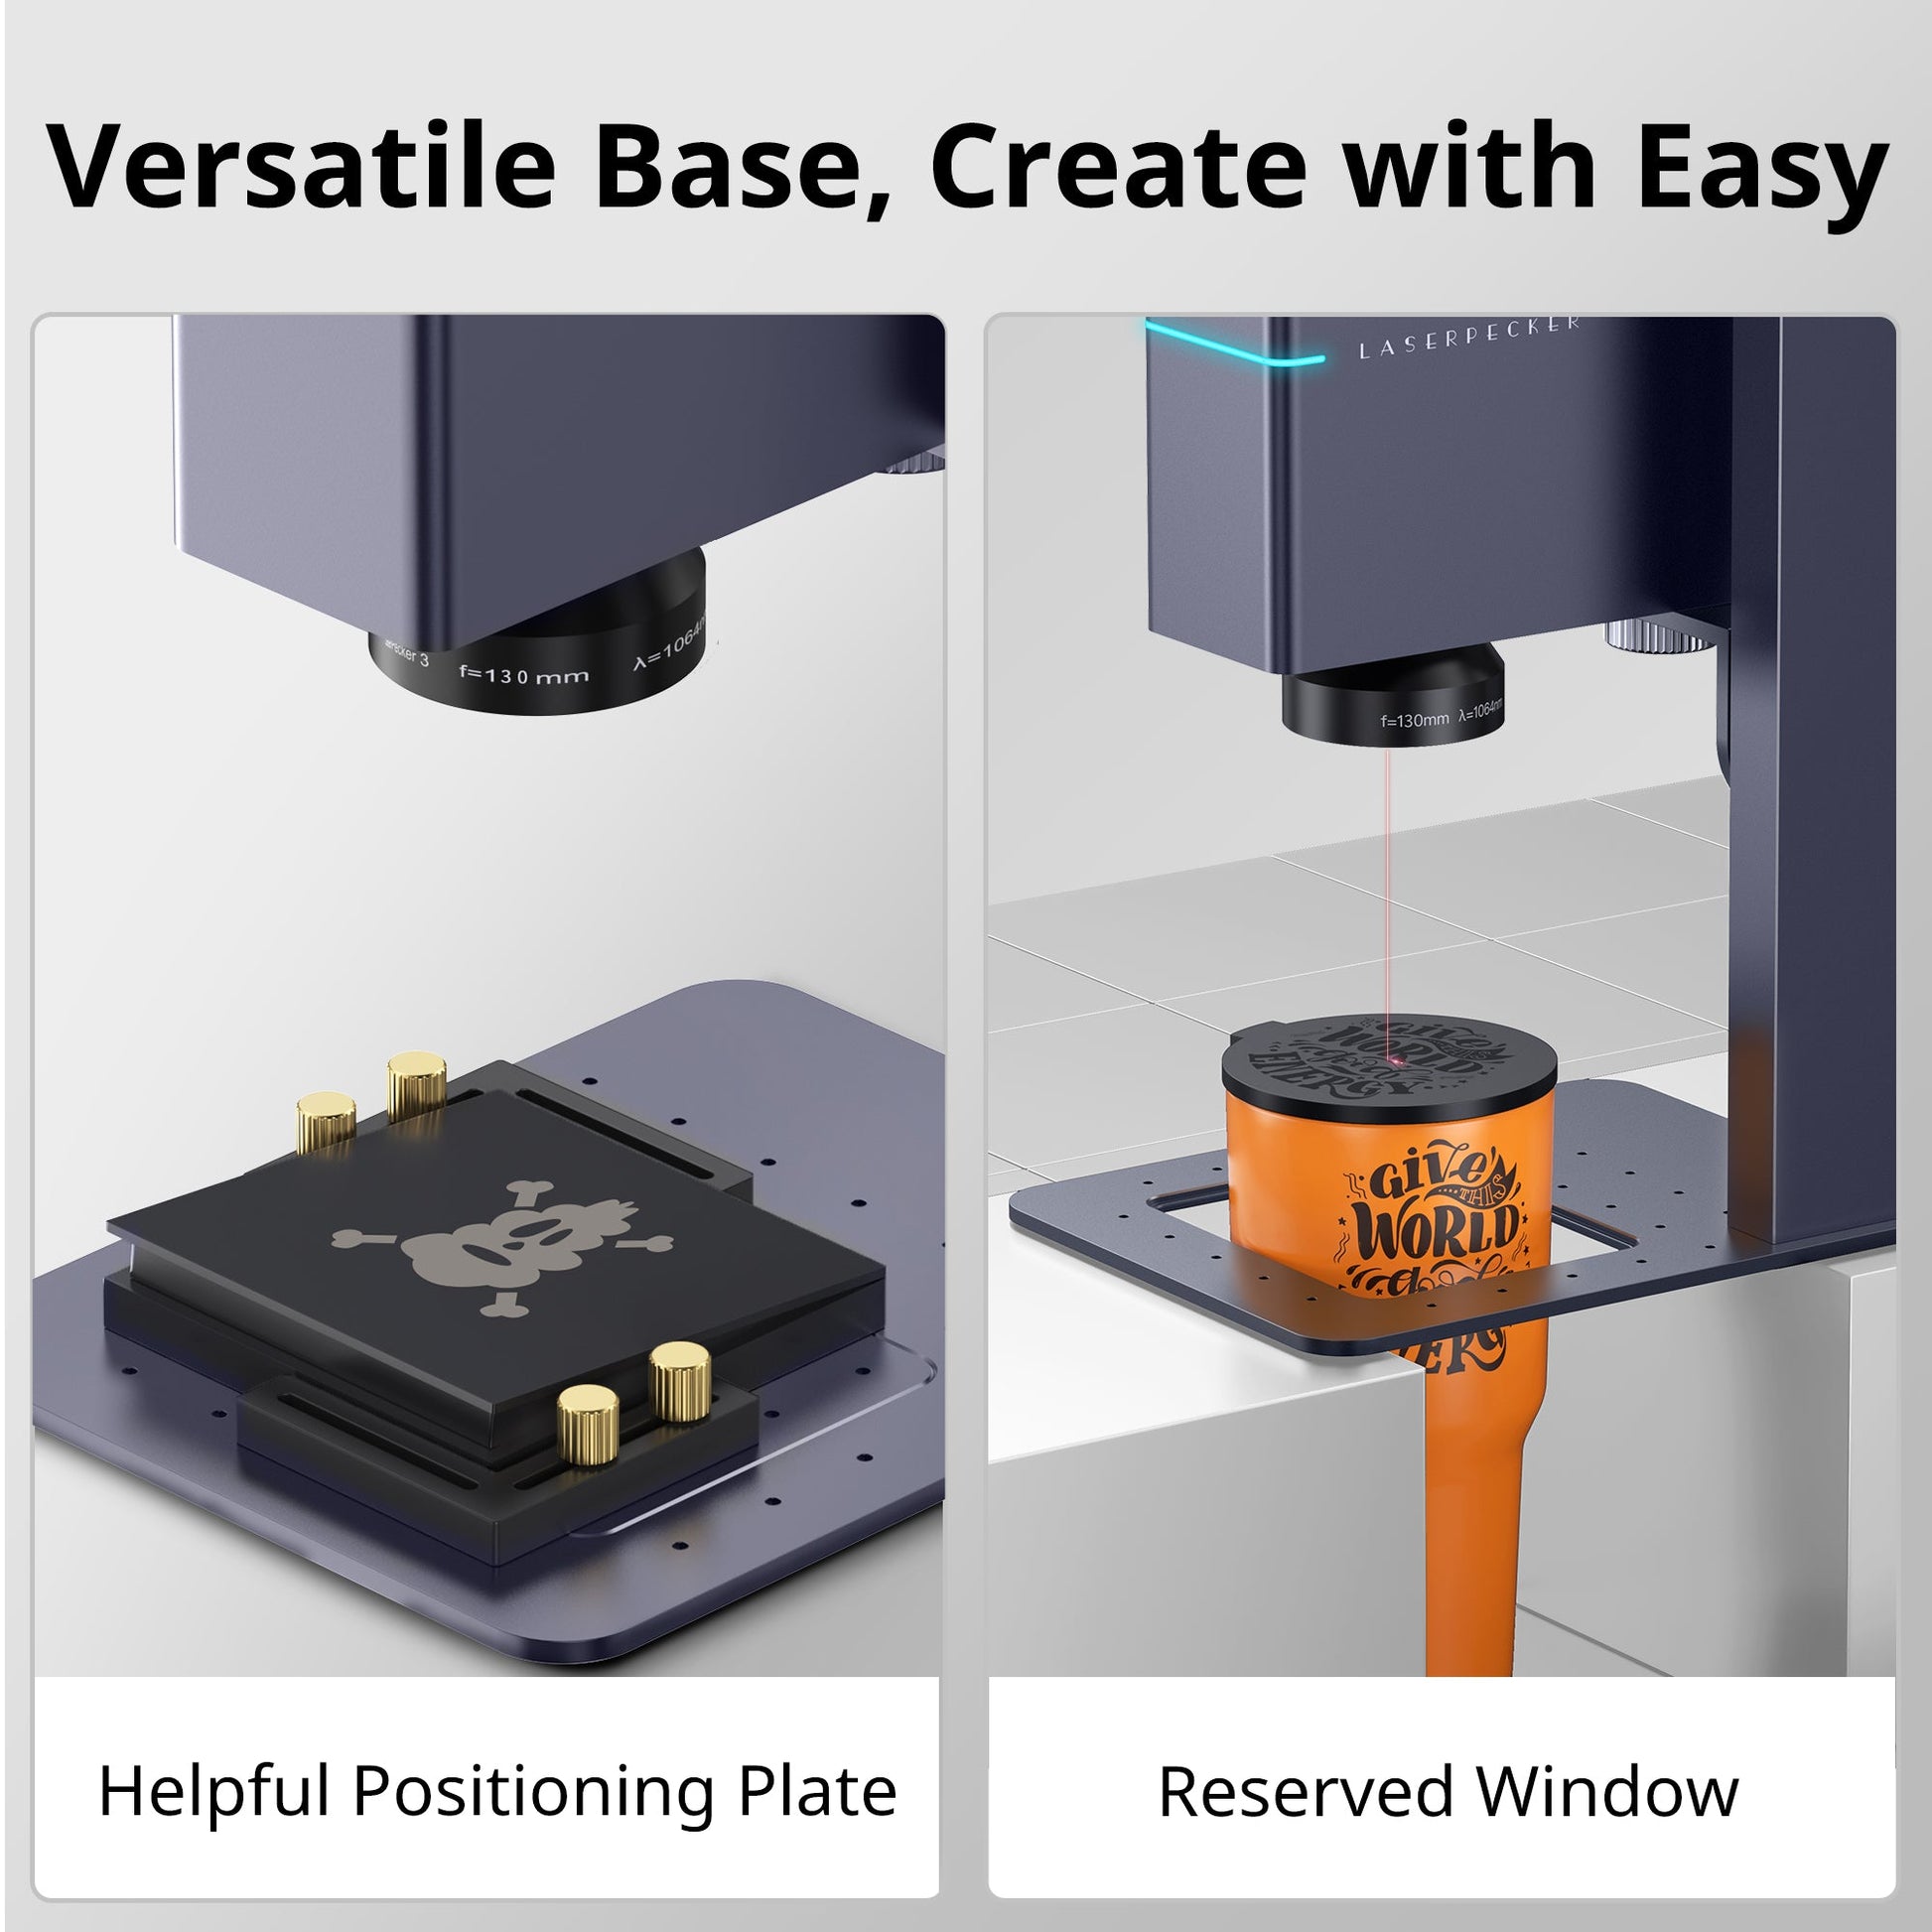 Versatile base plate for easy positioning